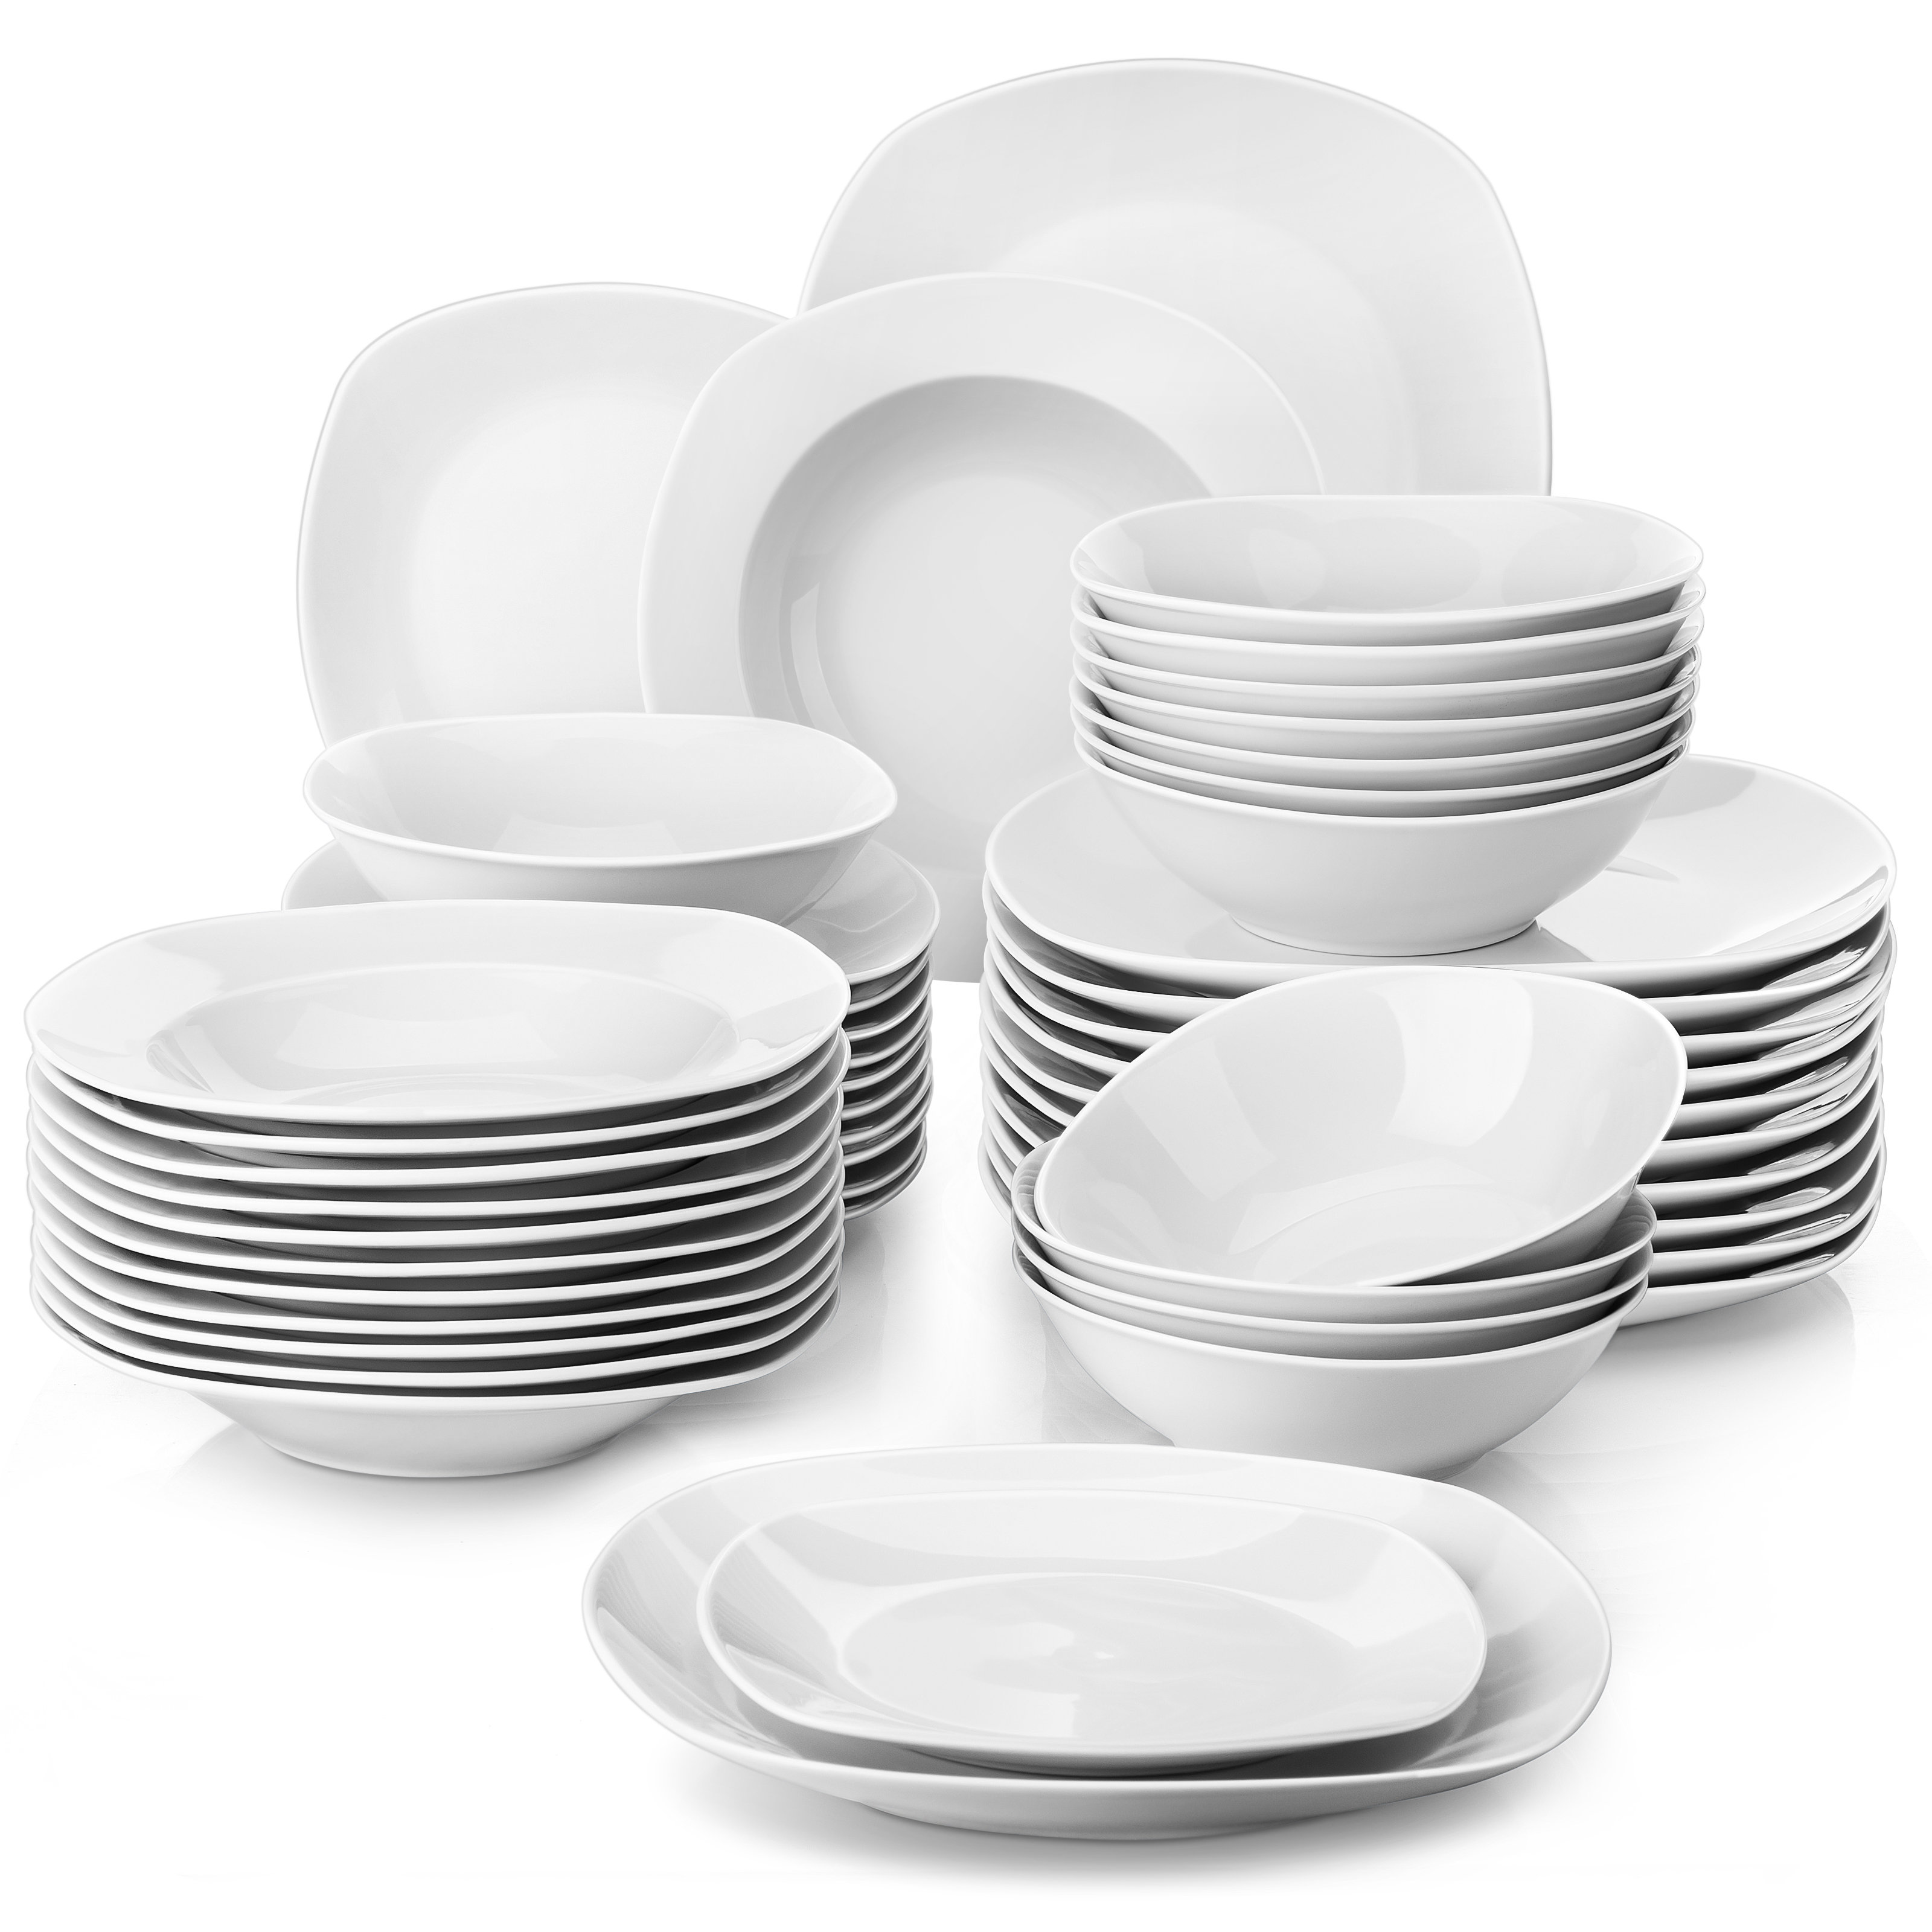 MALACASA Elisa, 6-Piece Dinner Plate Porcelain Plates Kitchen